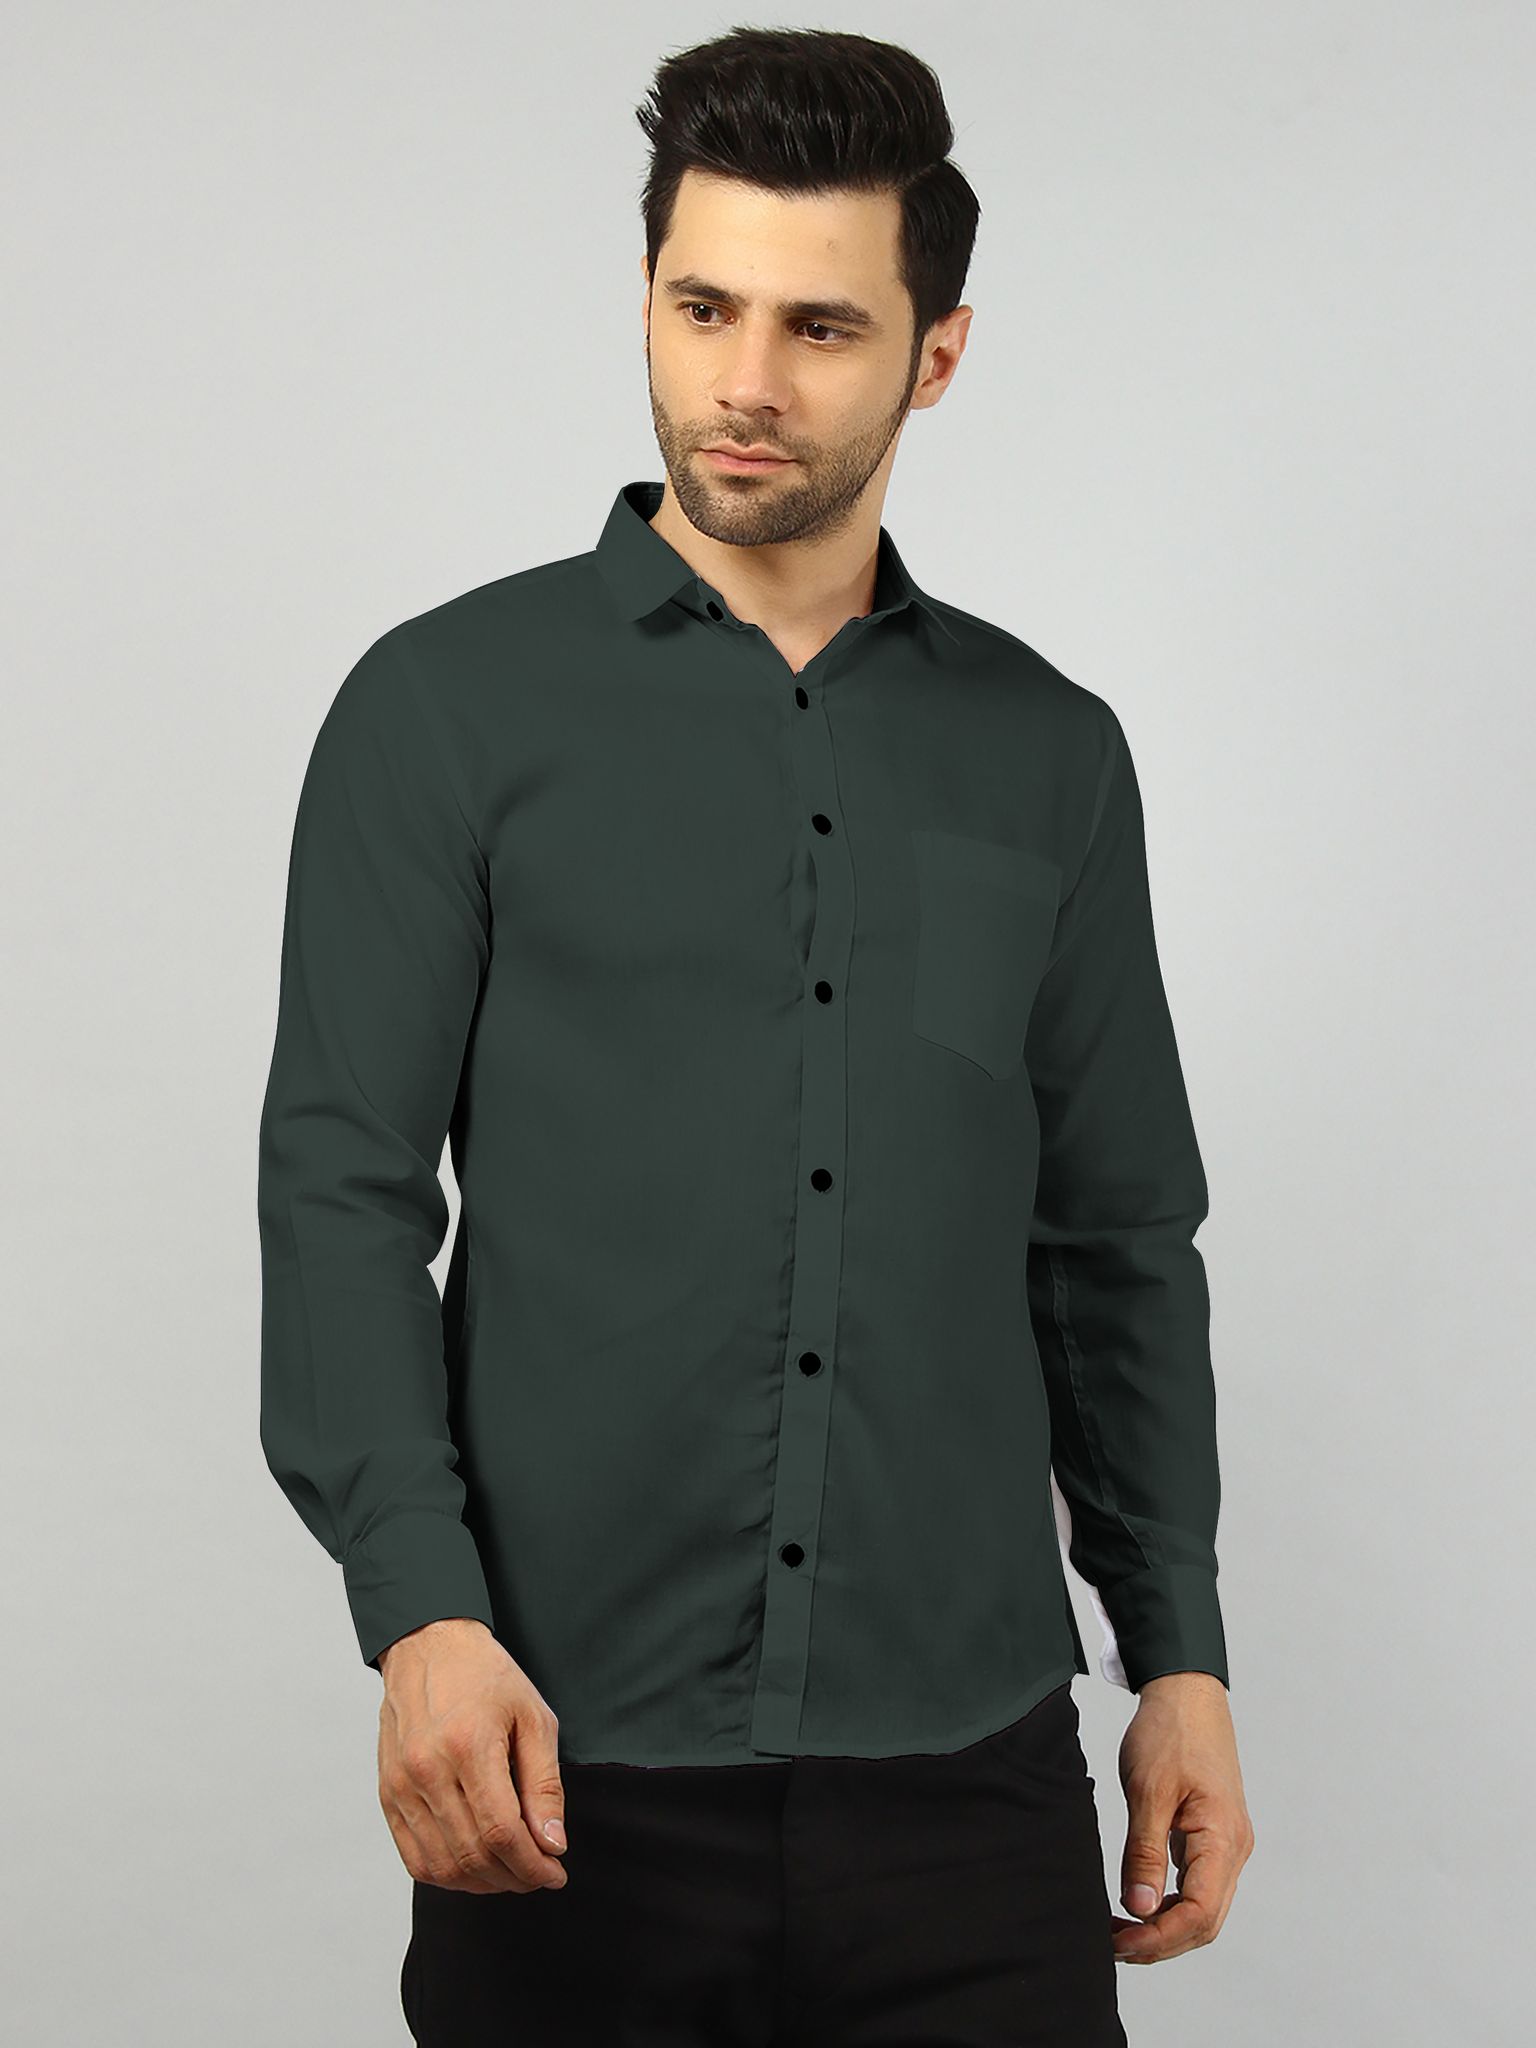 Casual Shirt for Men Full sleeves Olive Green